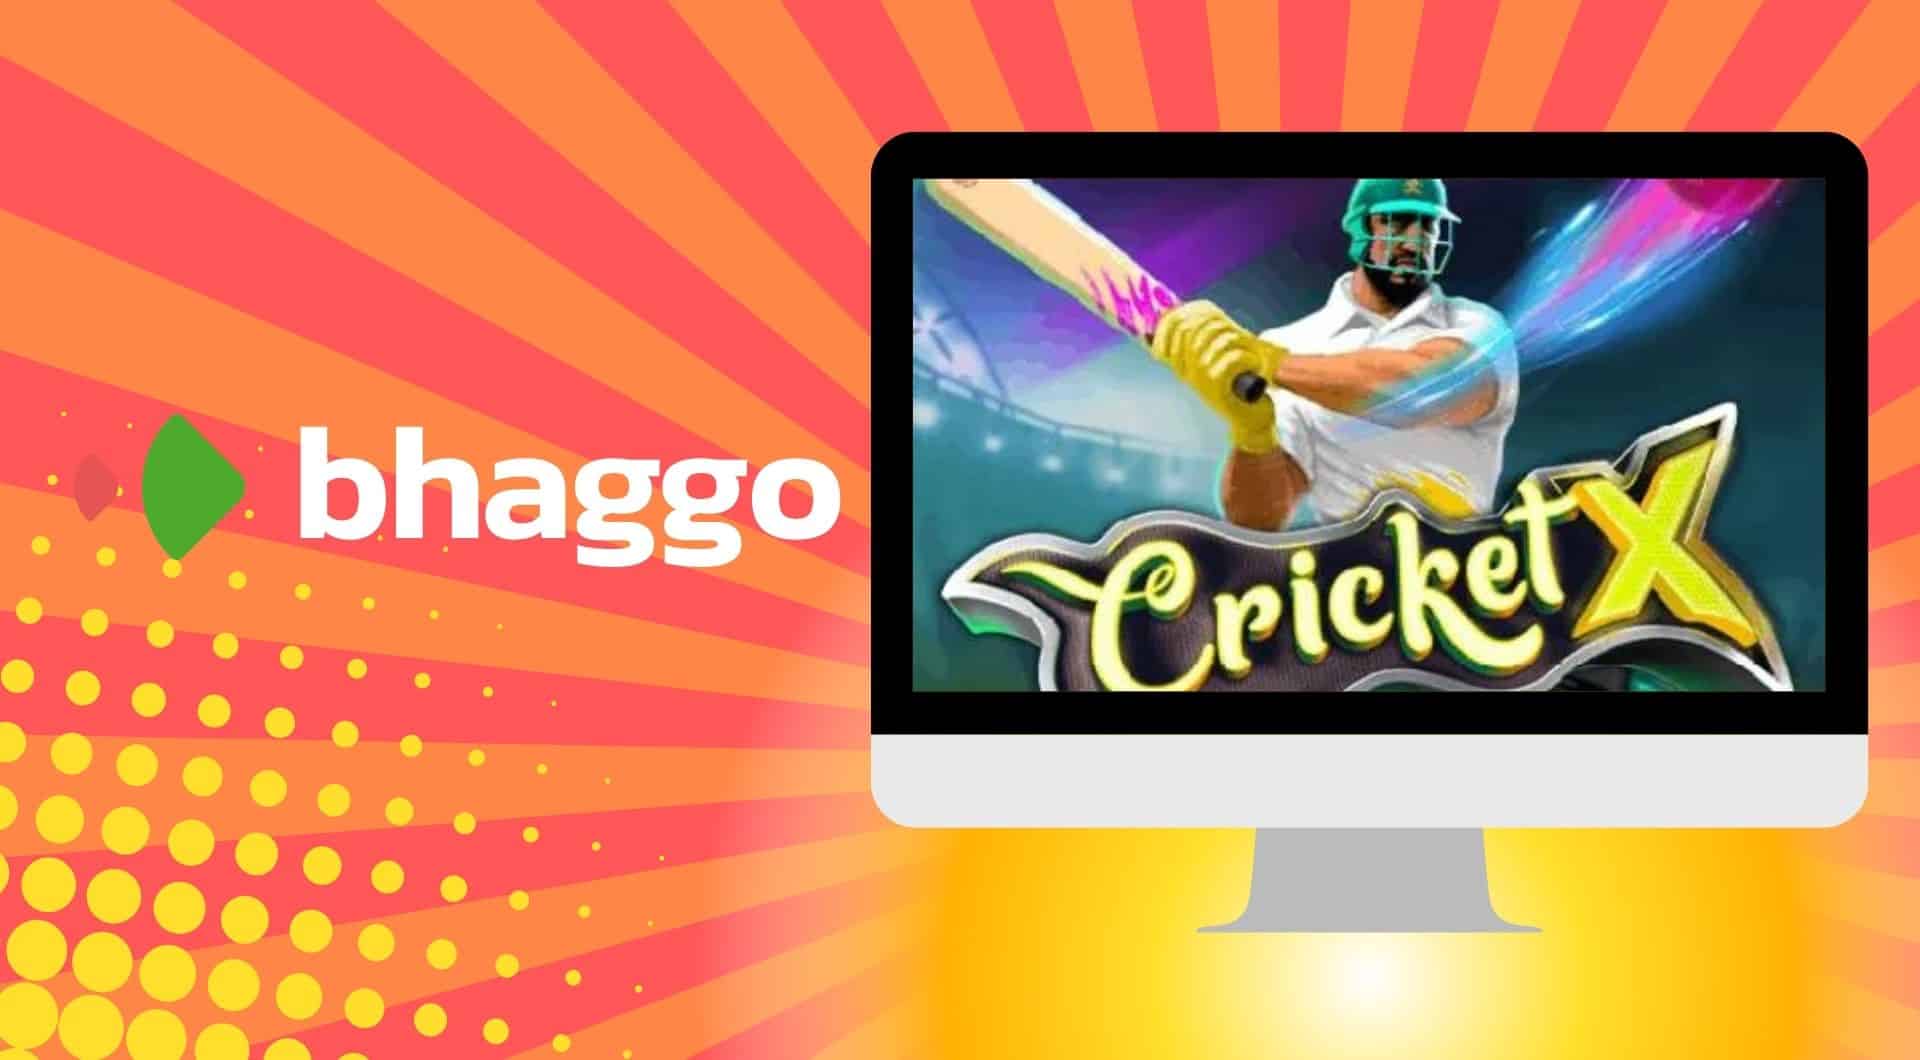 Bhaggo CricketX game overview in Bangladesh